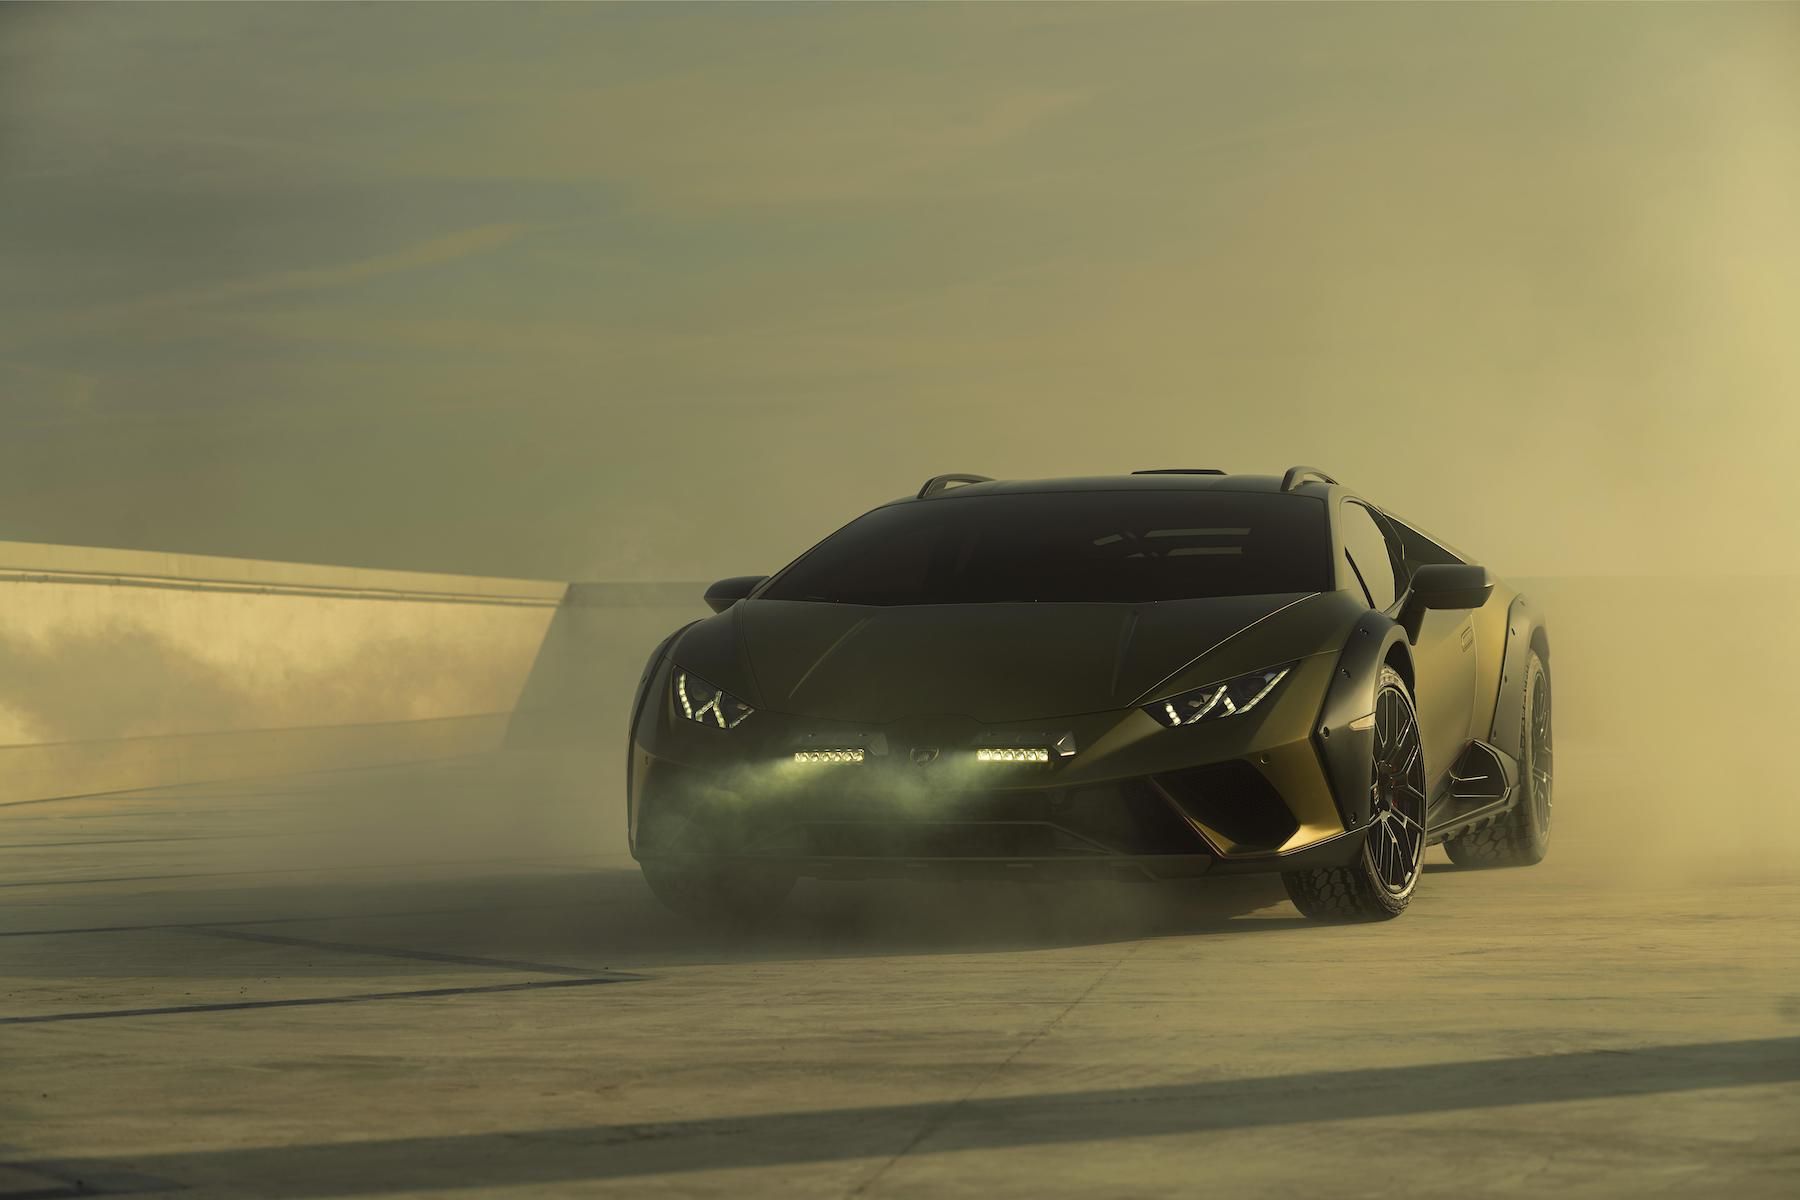 Lamborghini presents the goals achieved in 2022, the best year so far